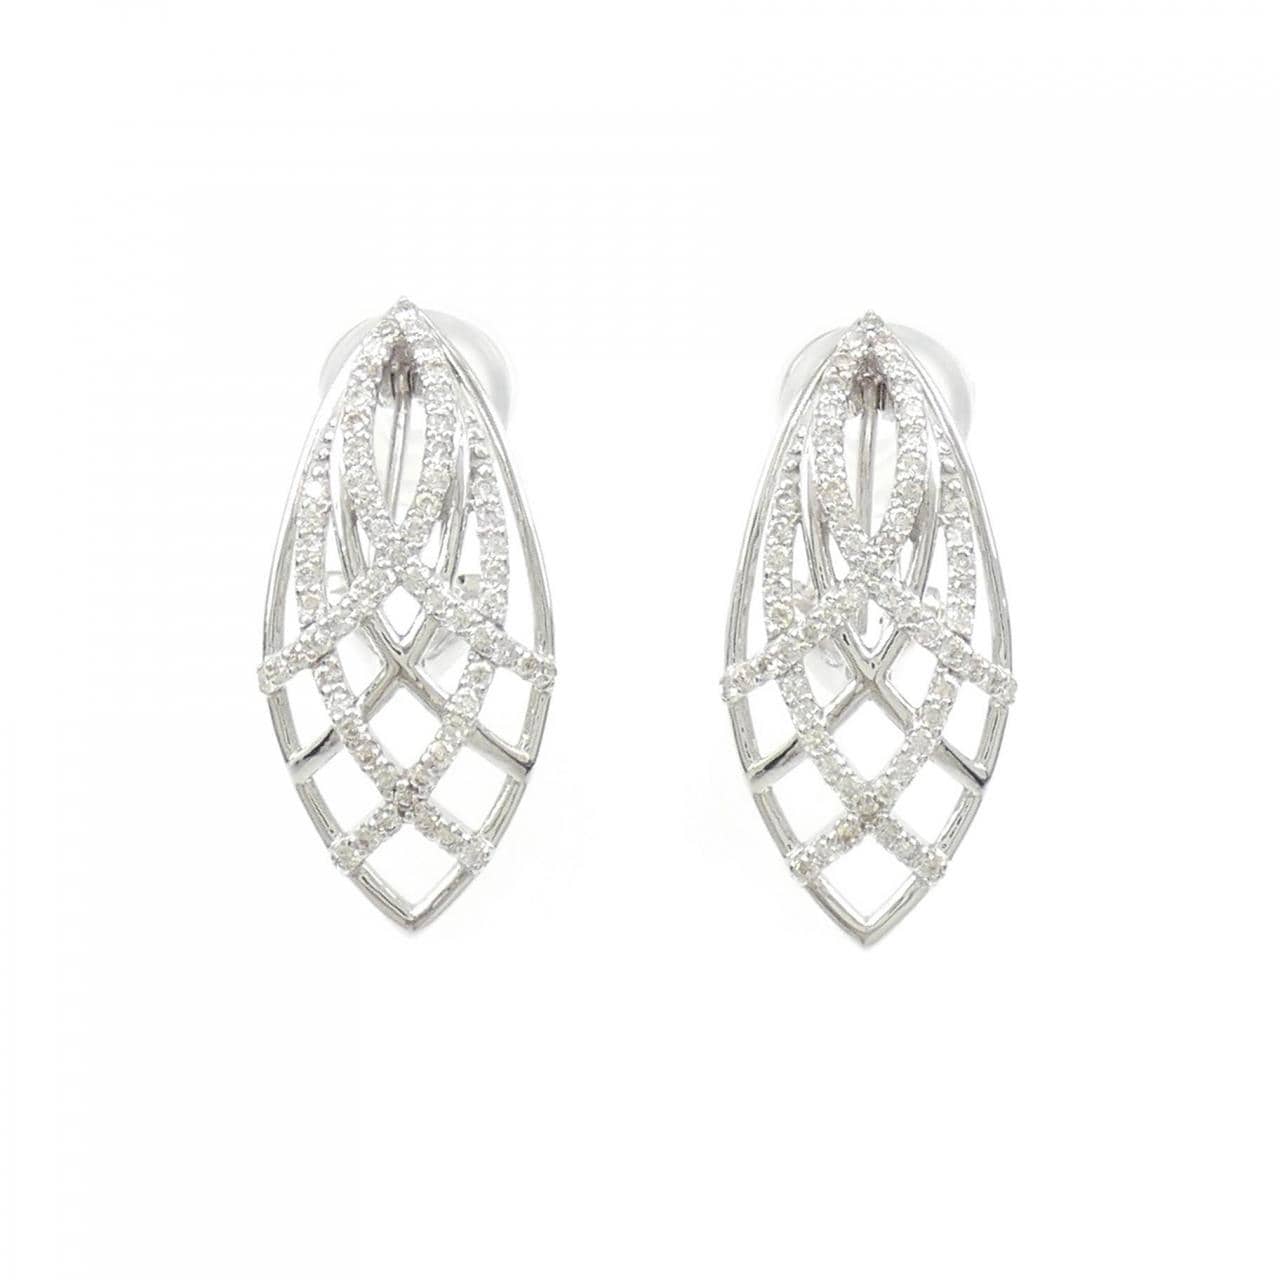 K18WG Diamond earrings/earrings 0.62CT